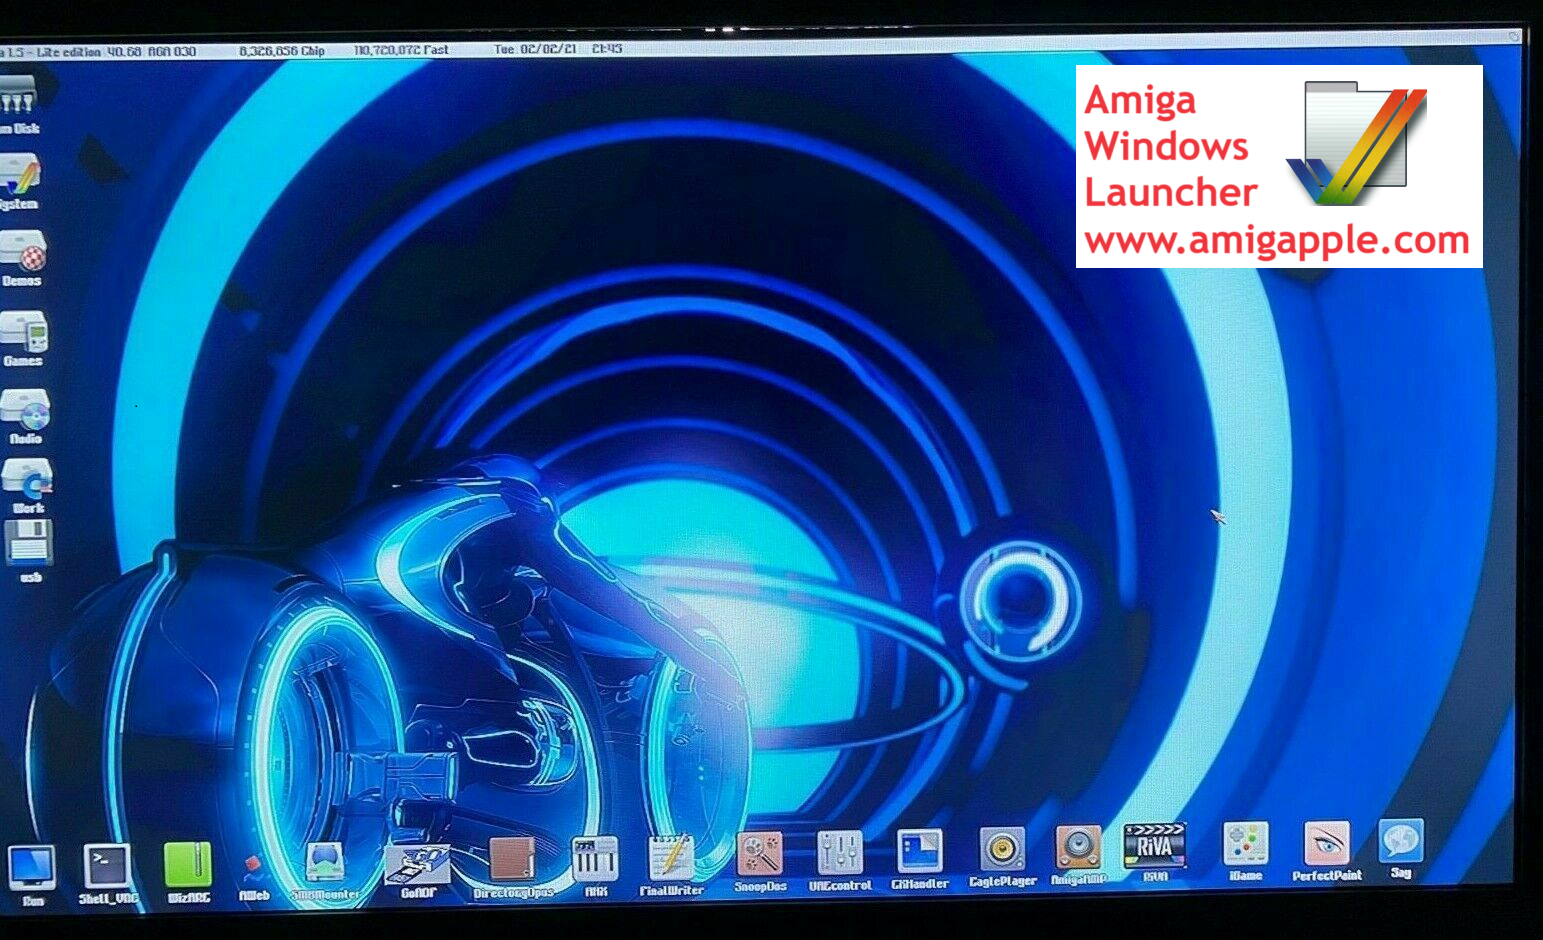 amigApple Windows Launcher AmigaOS Amiga PiMiga Exclusive 32GB For Windows - PC Computers